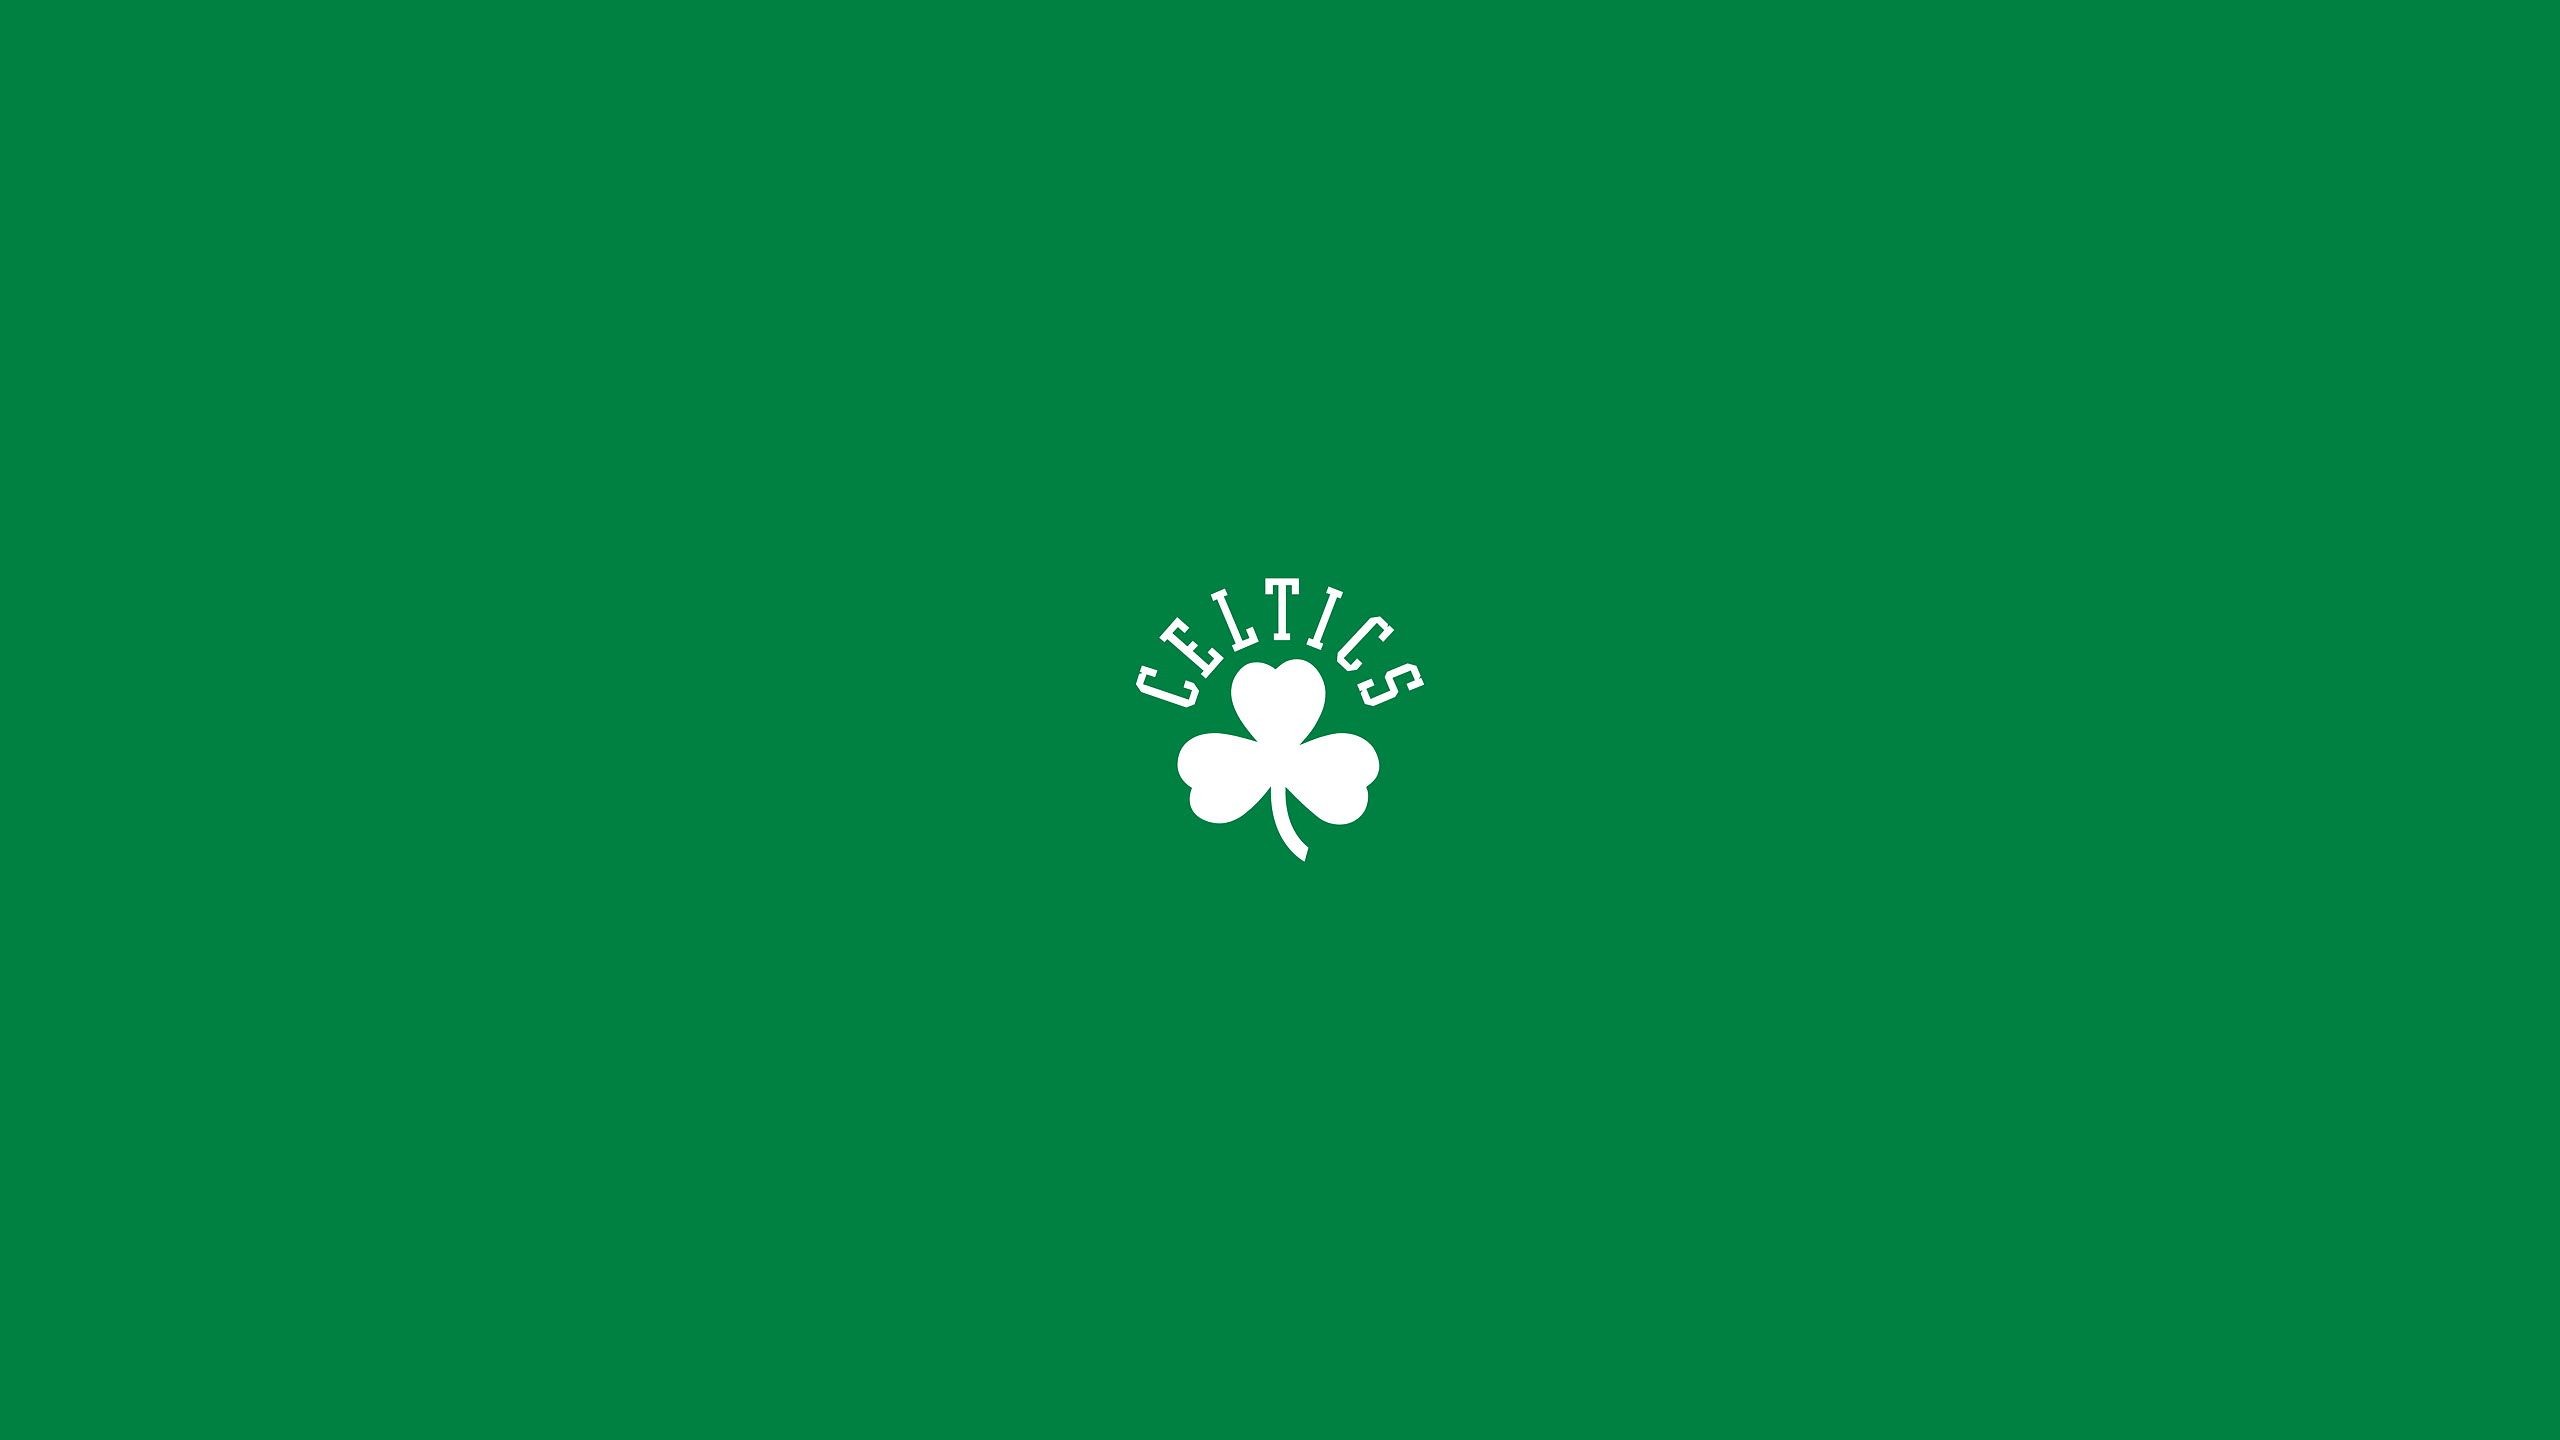 2560x1440 Celtics logo wallpaper 1, 2, 3, 4